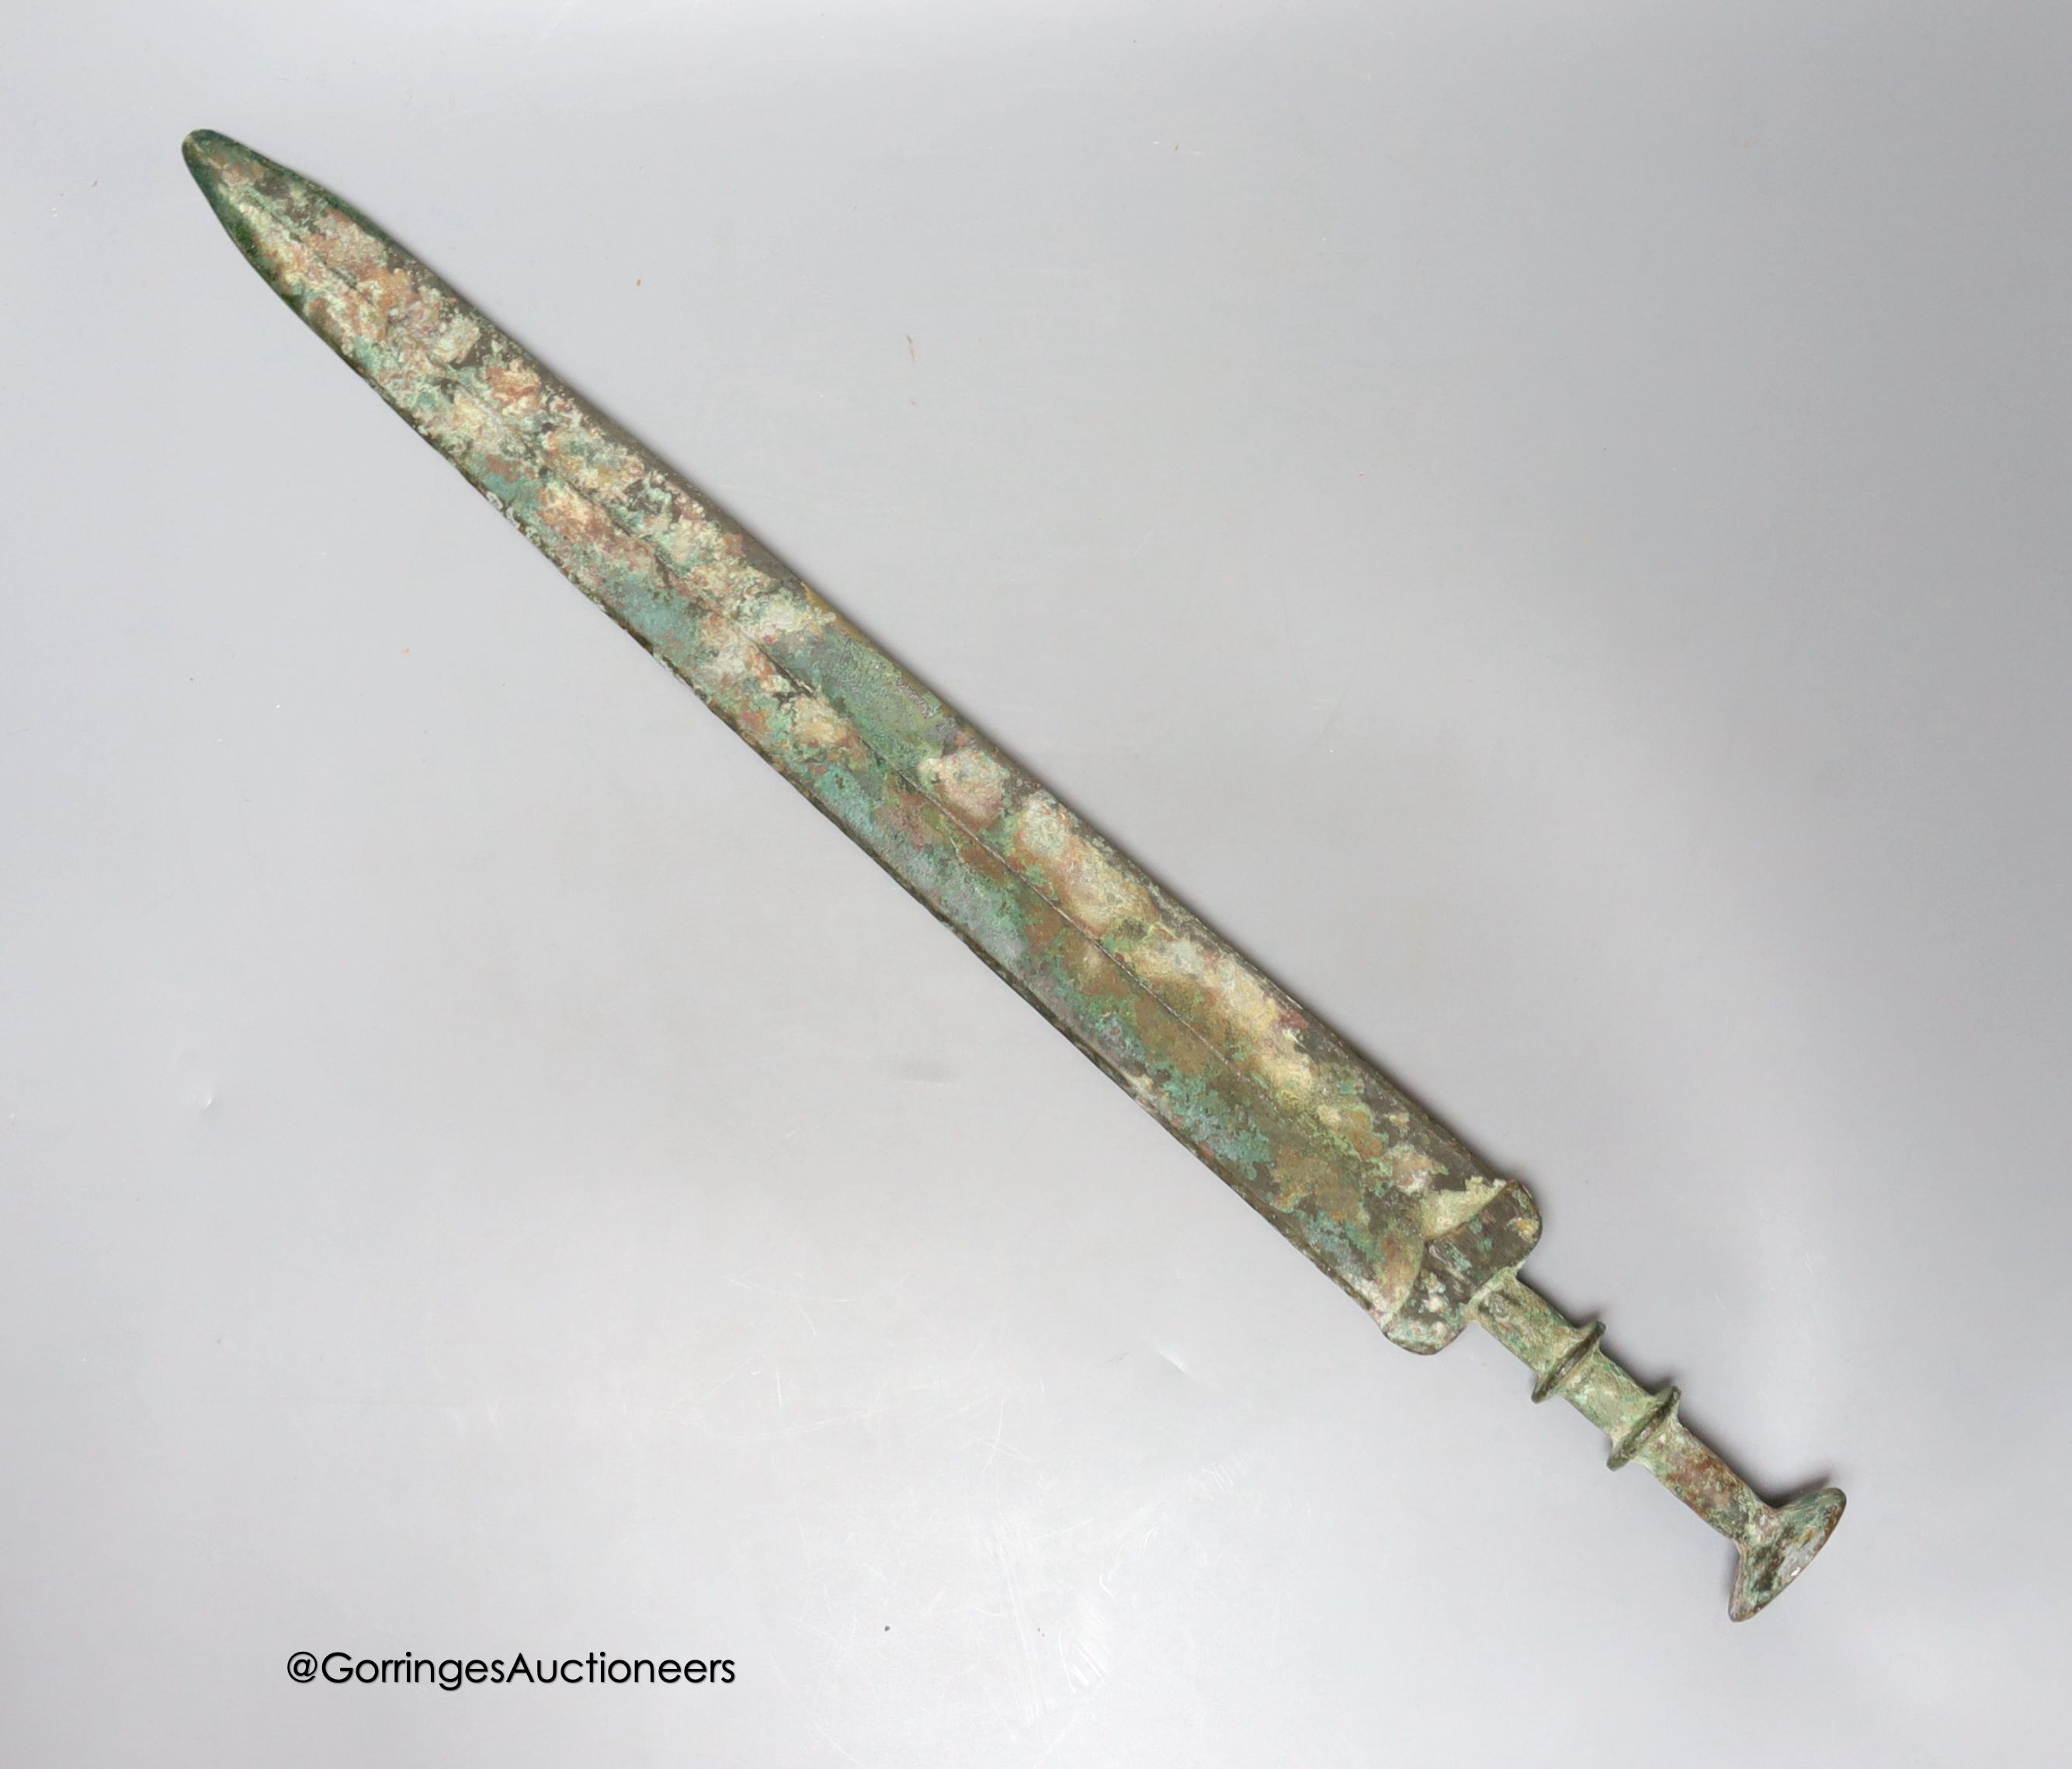 A Chinese bronze dagger/sword